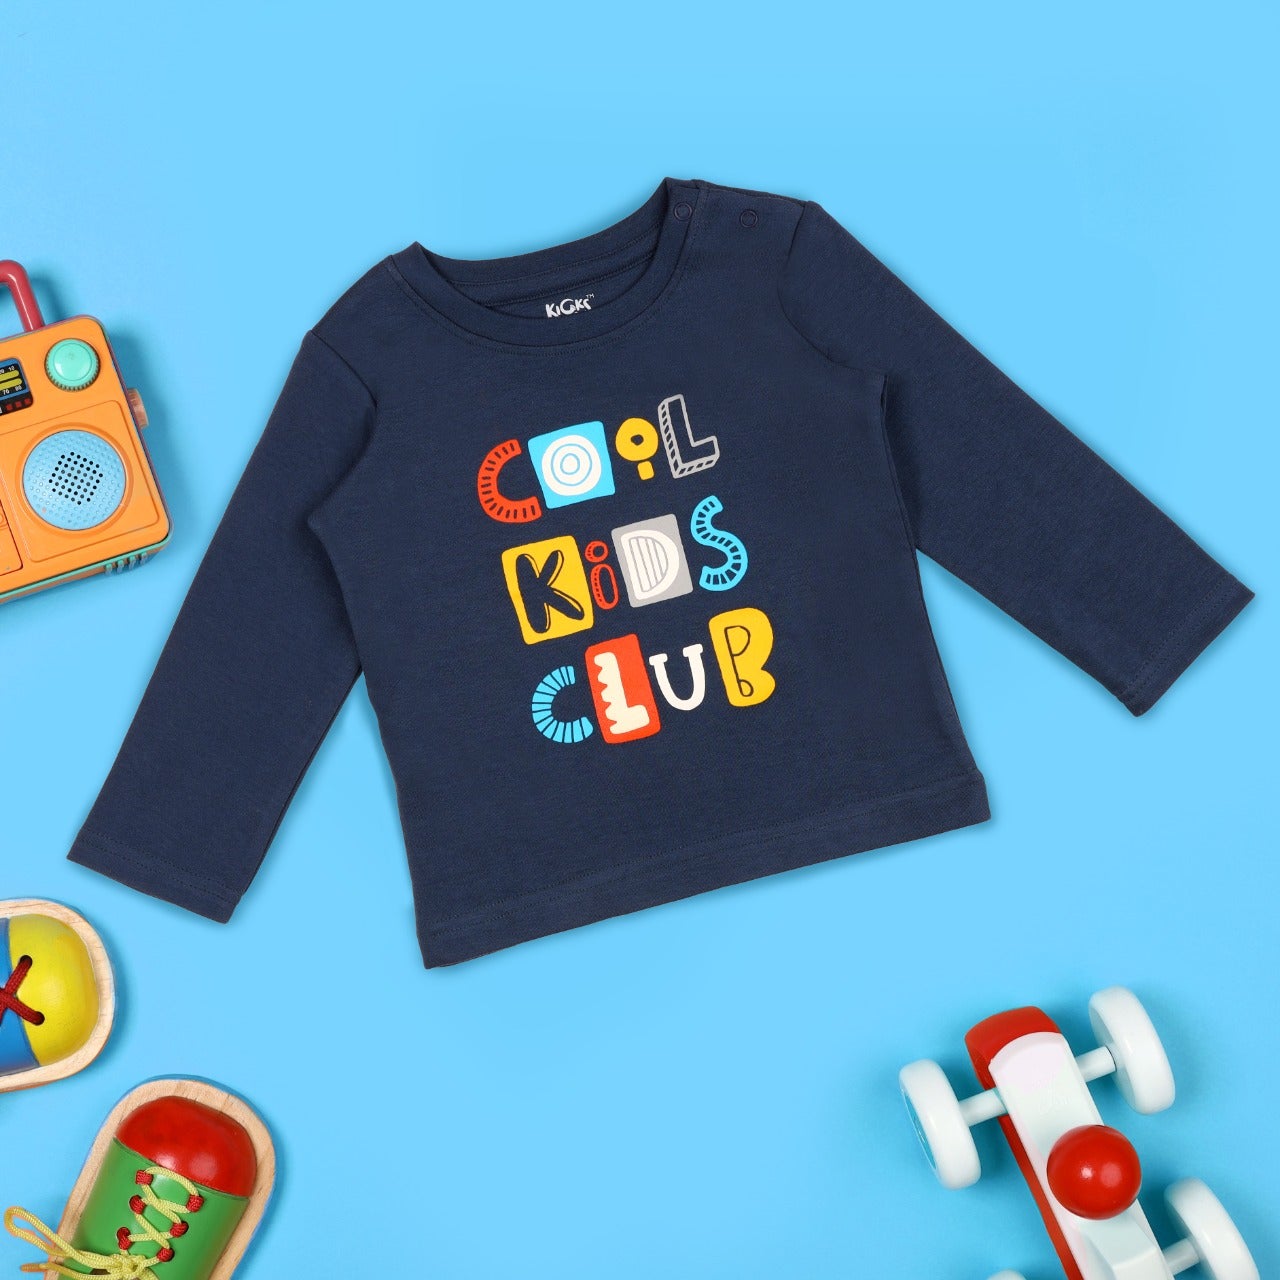 Kicks & Crawl- The Cool Kids Club T-shirt